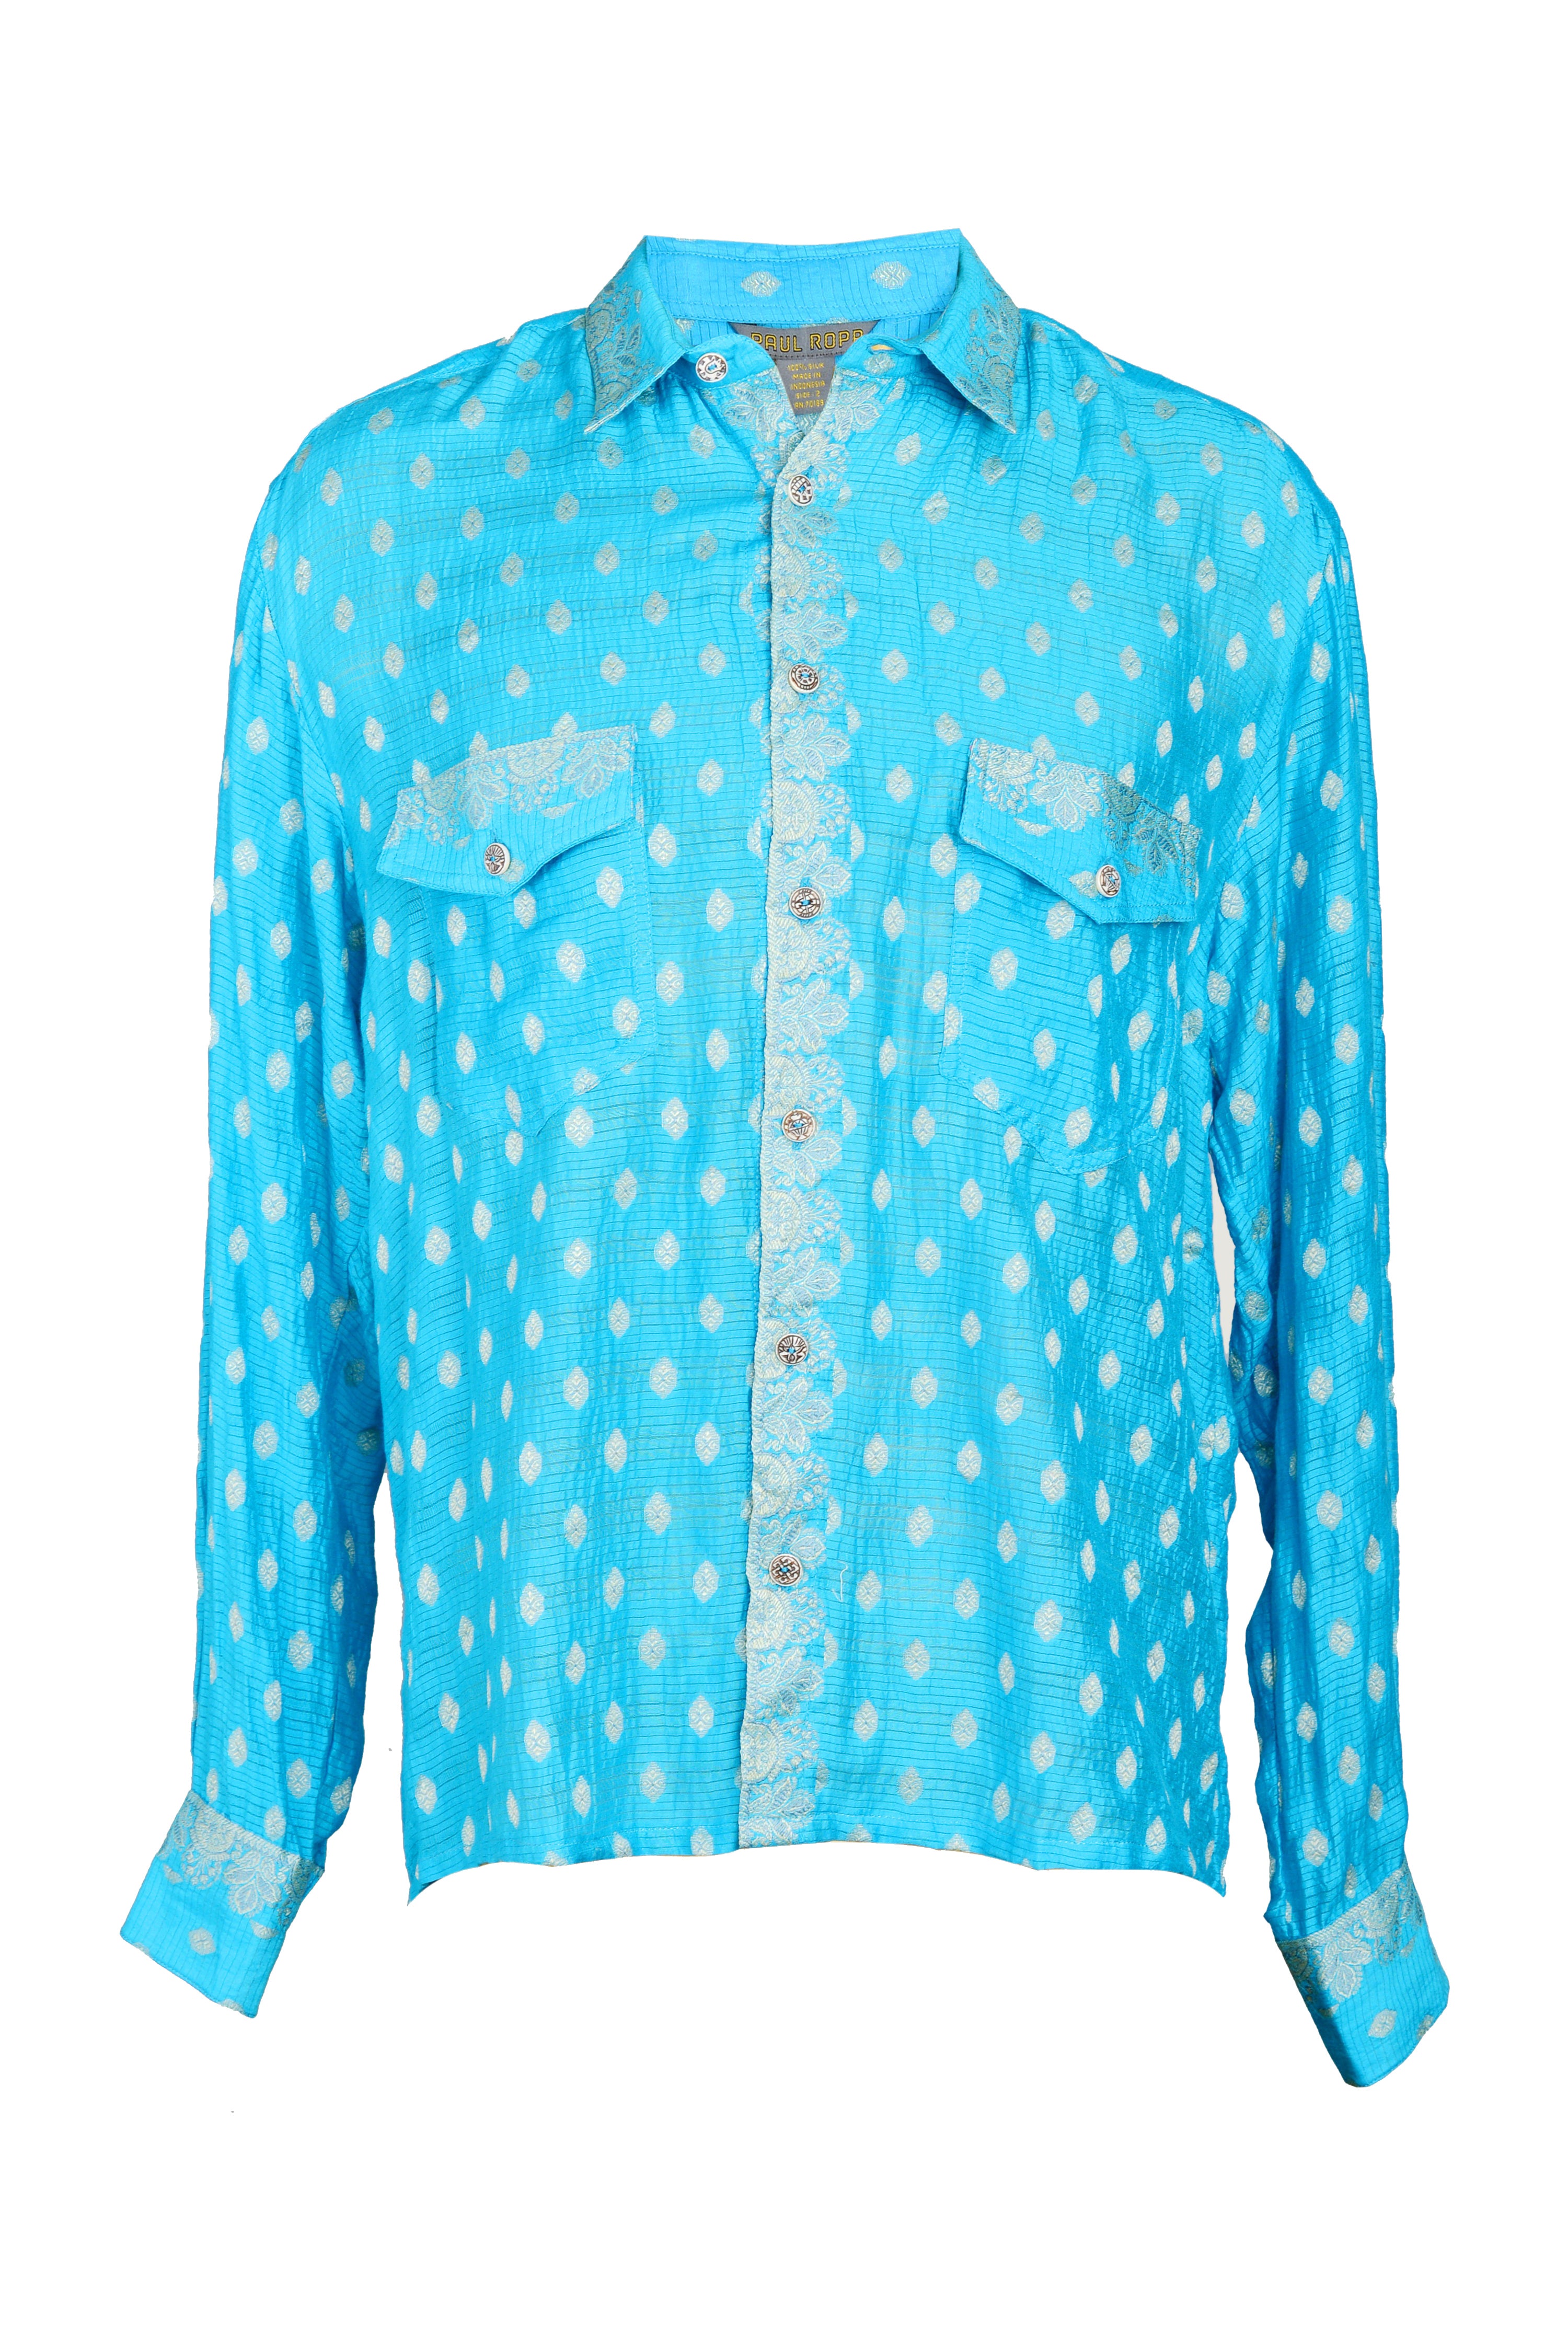 Reel Life Bold Face Mahi UV Long Sleeve Performance T-Shirt - Dress Blues  メンズ